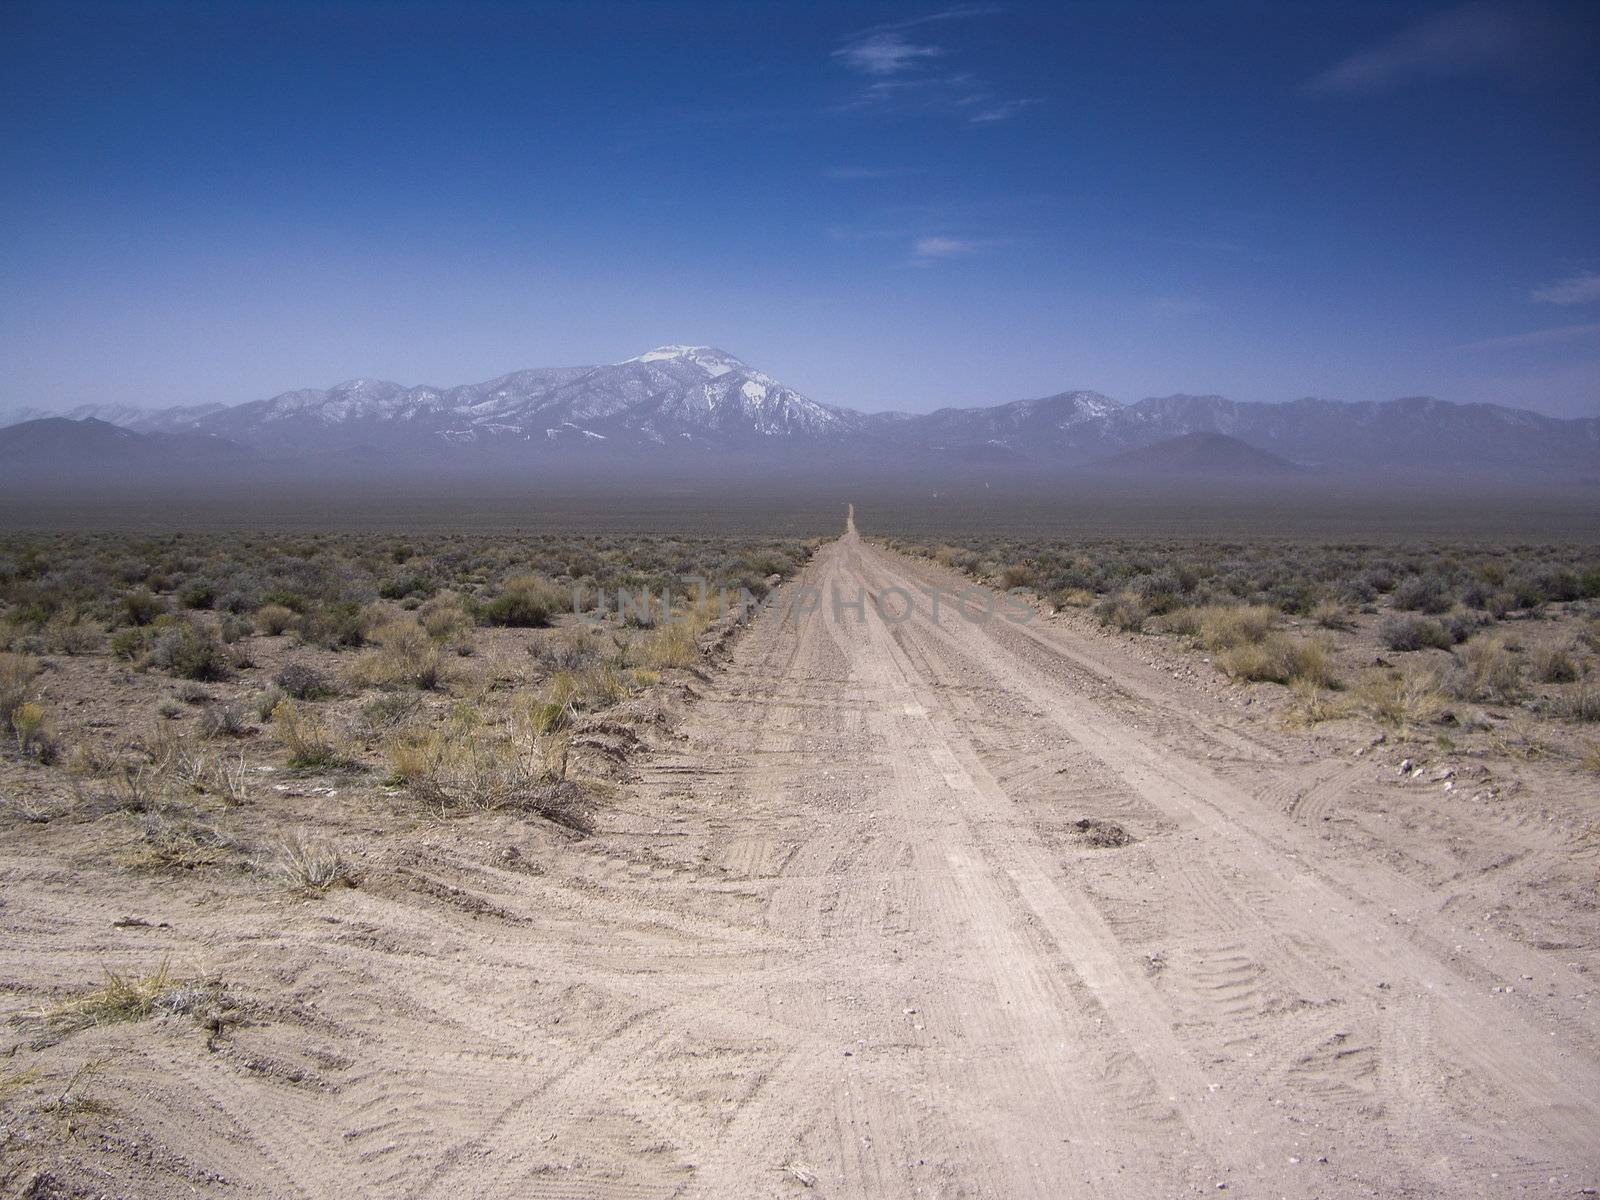 Desert Vista on dirt road by emattil